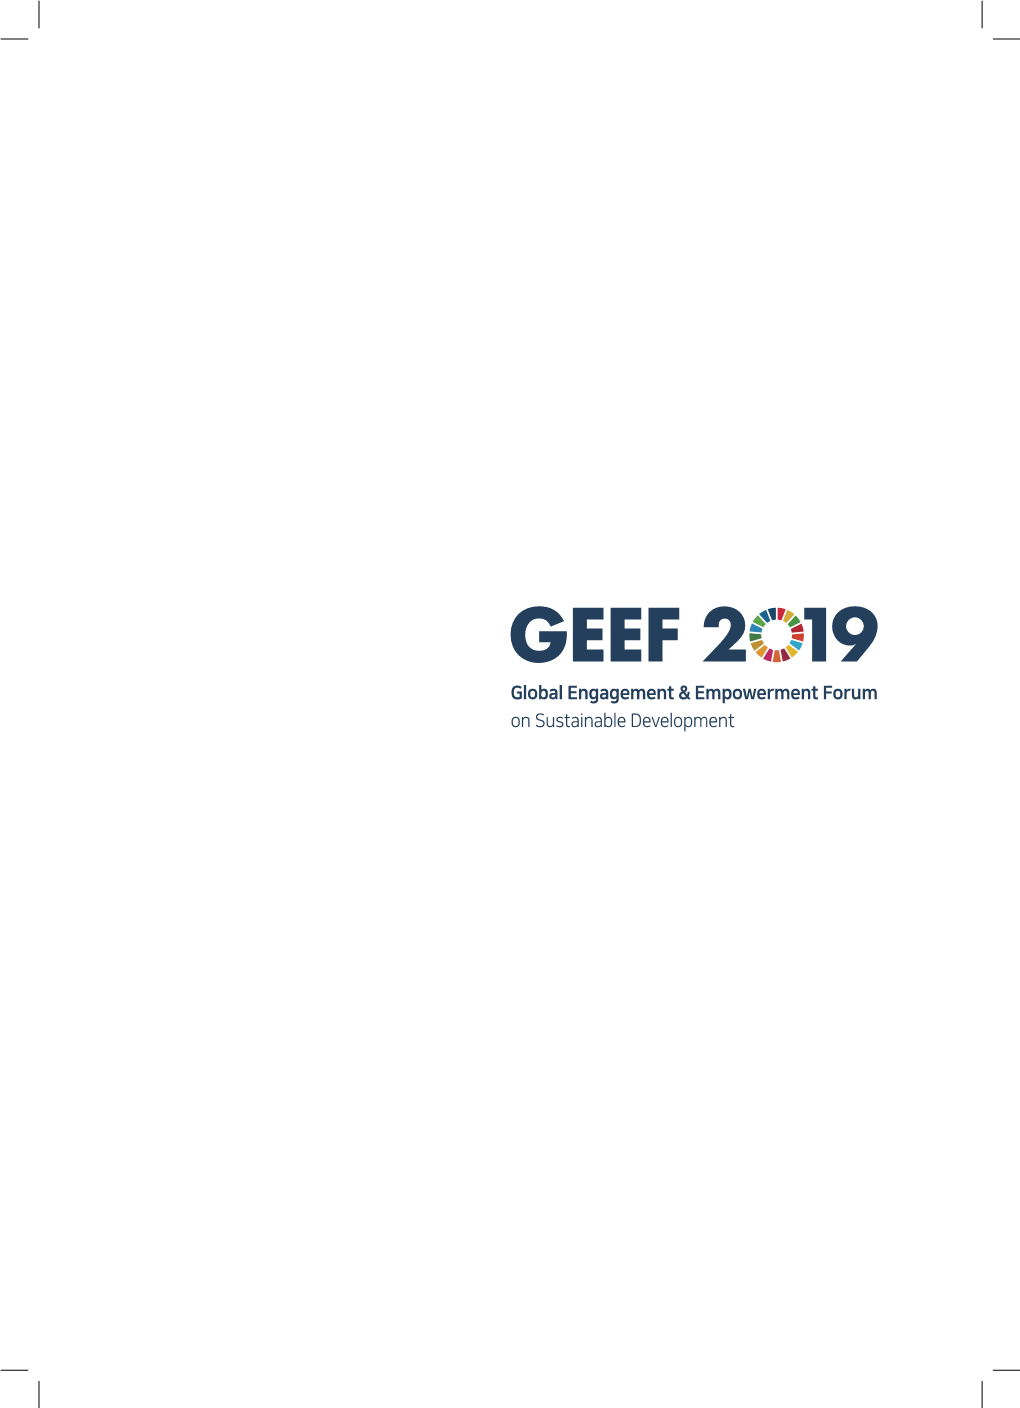 GEEF Report 2019 Spread.Pdf